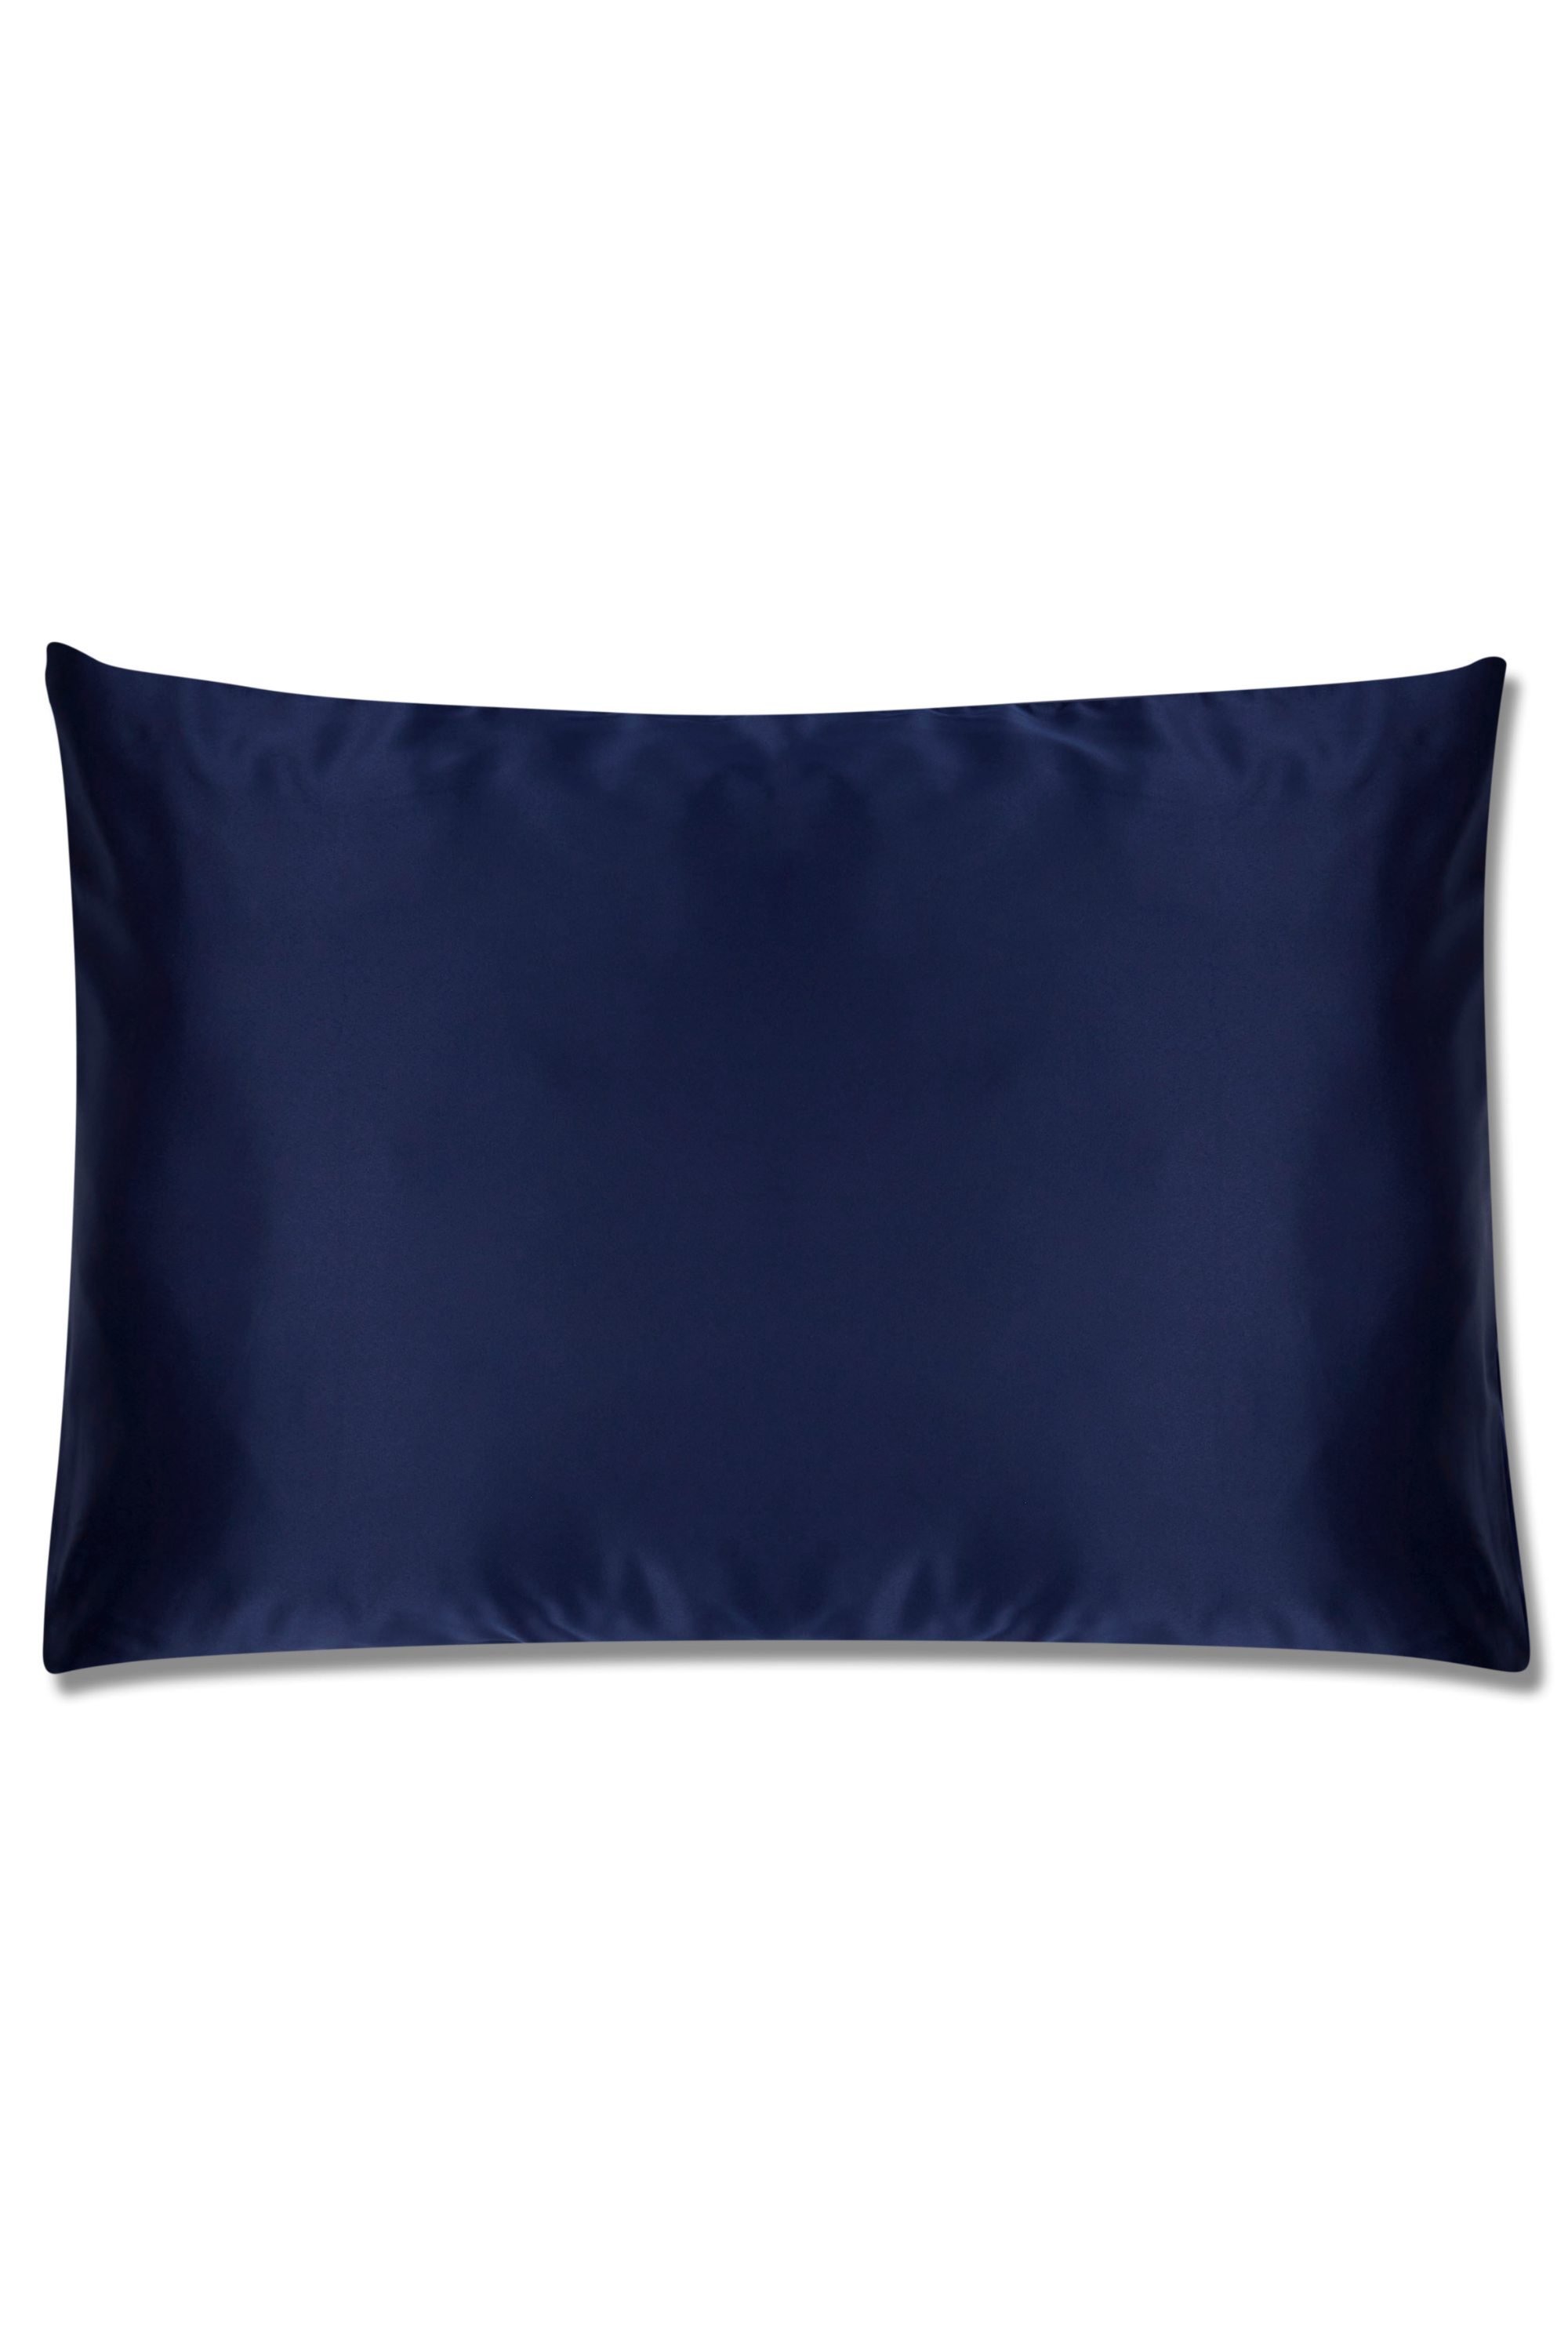 Satin Pillowcase - Royal Azure - MUAVES